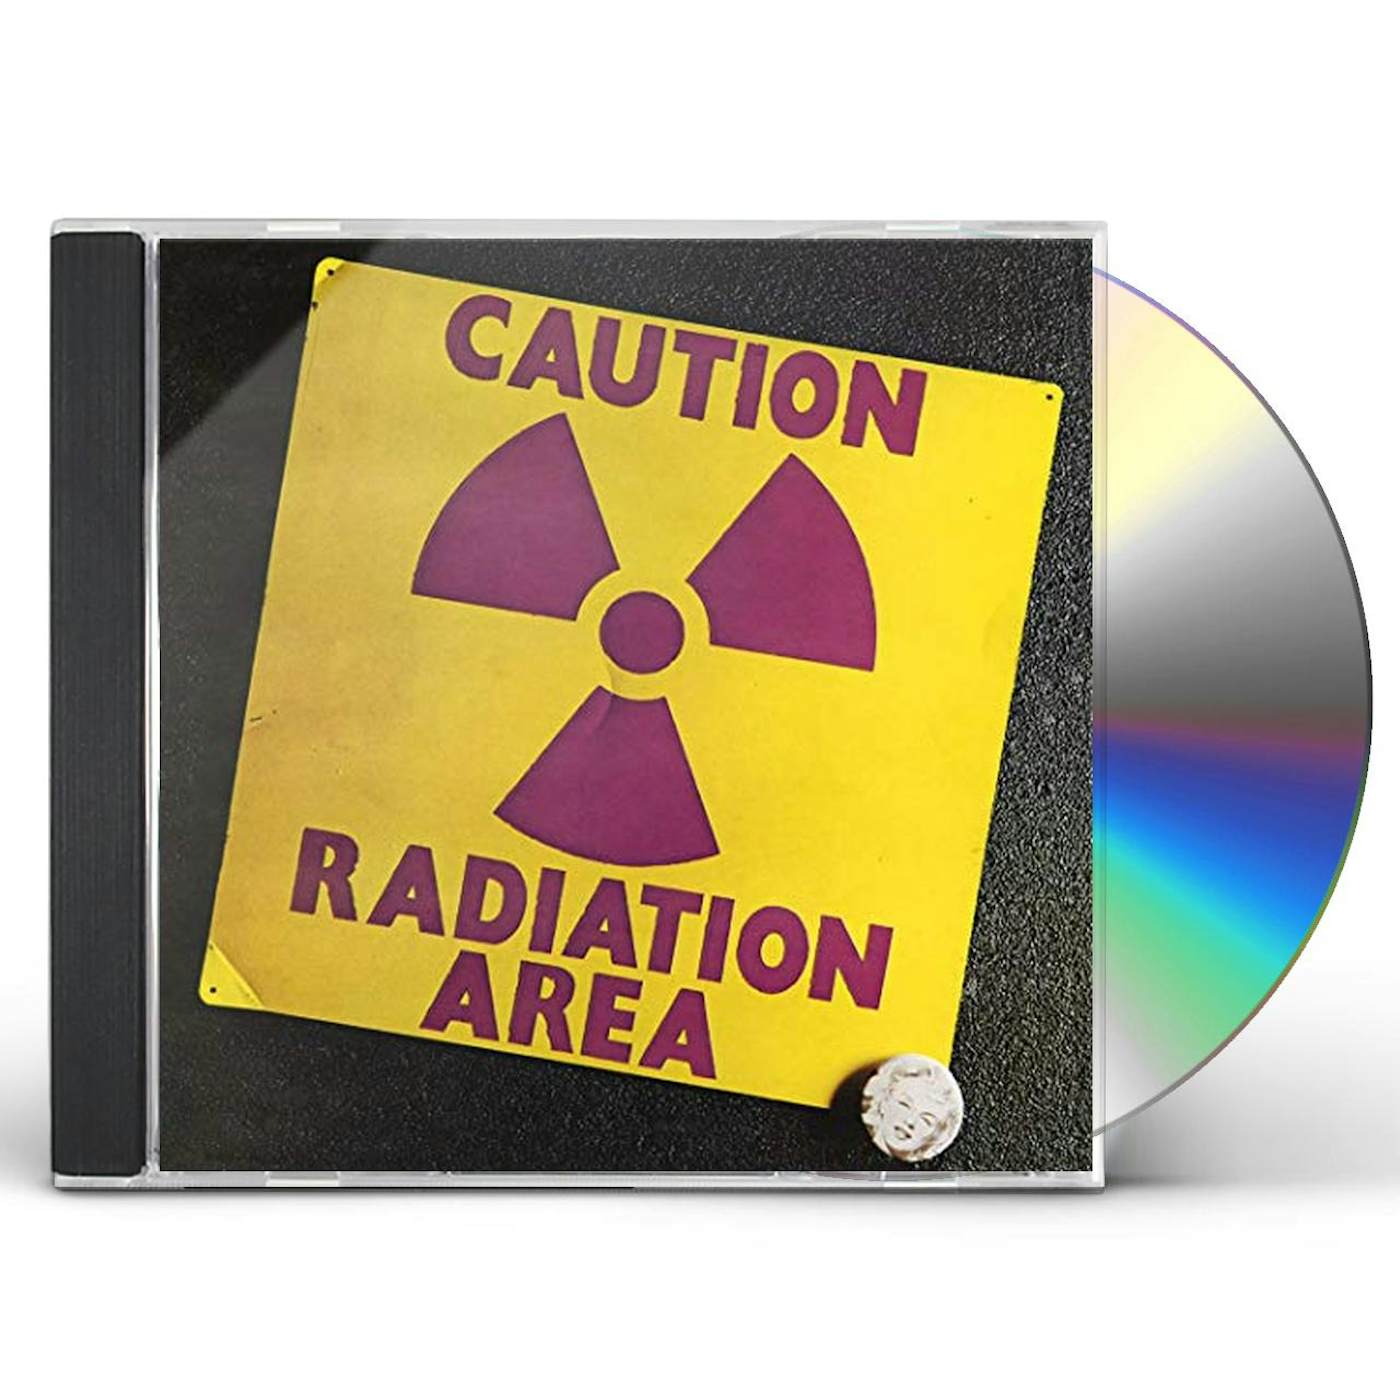 CAUTION RADIATION AREA CD